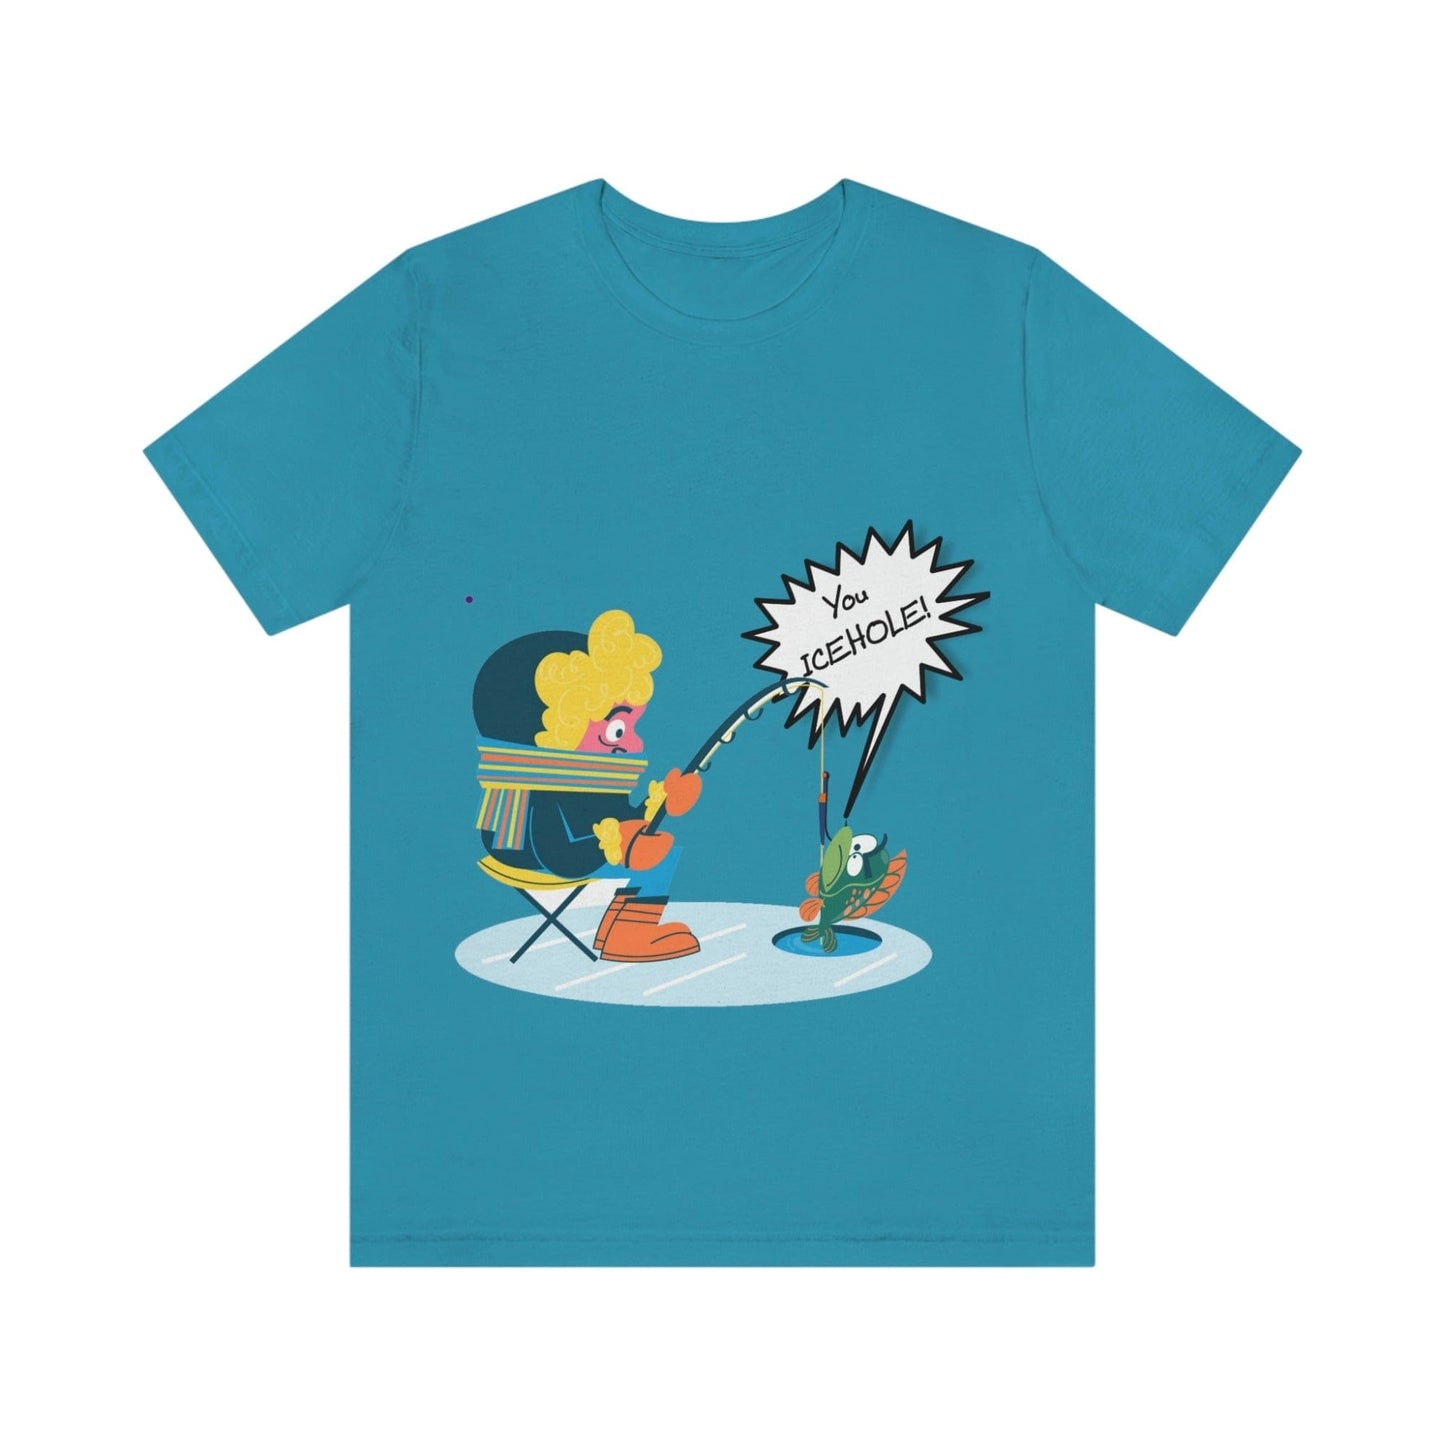 Ironic Funny Ice Fishing T Shirt, Fun Silly Goofy Shirt, Soft Bella Canvas